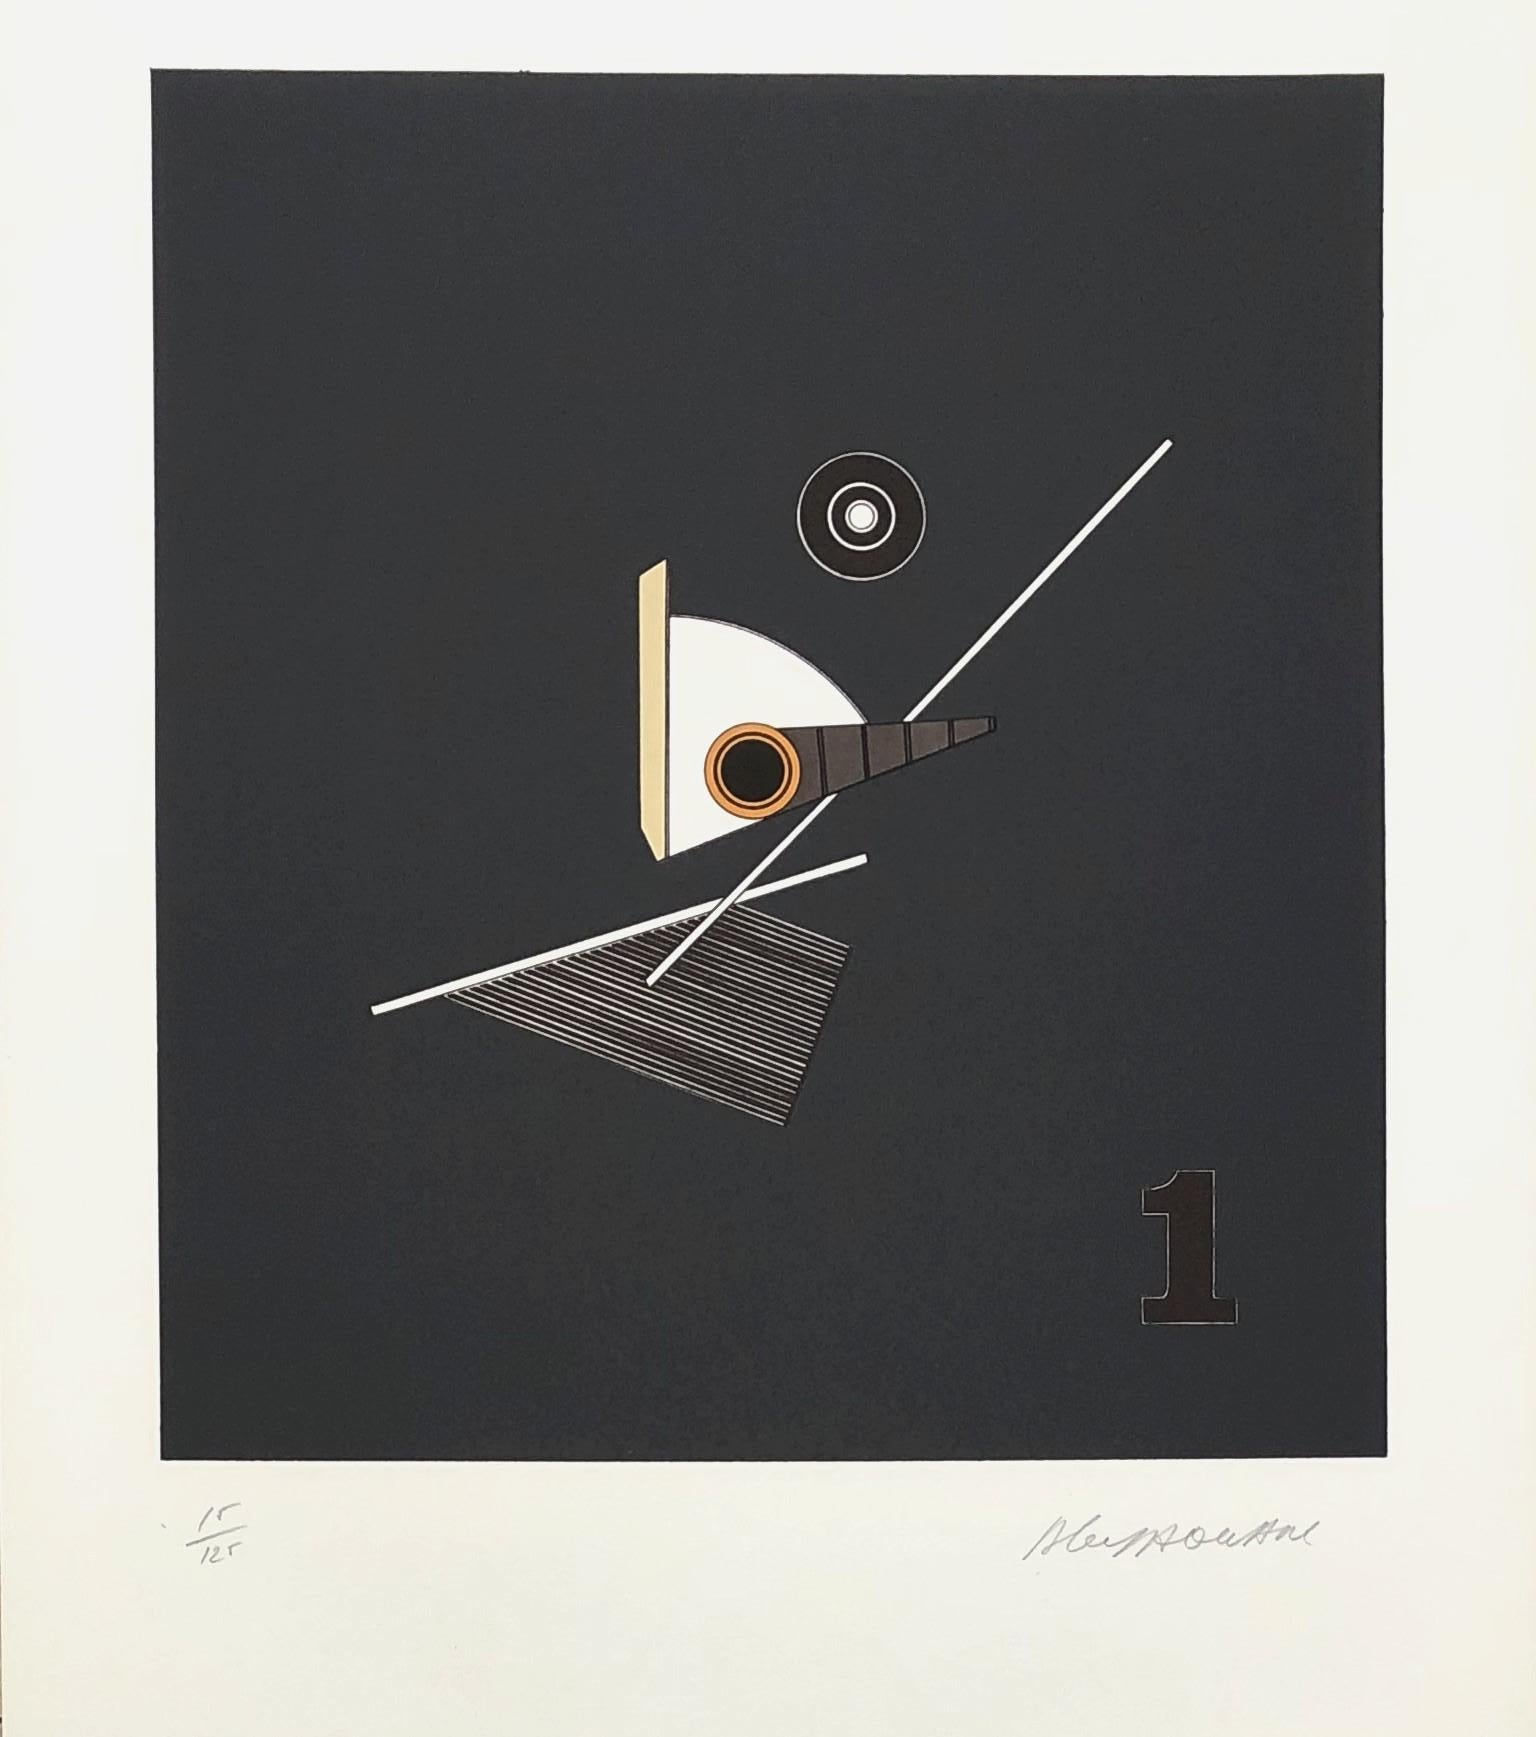 Alain Le Yaouanc Interior Print - Geometric Composition VII - Original Lithograph Handsigned - 125 copies